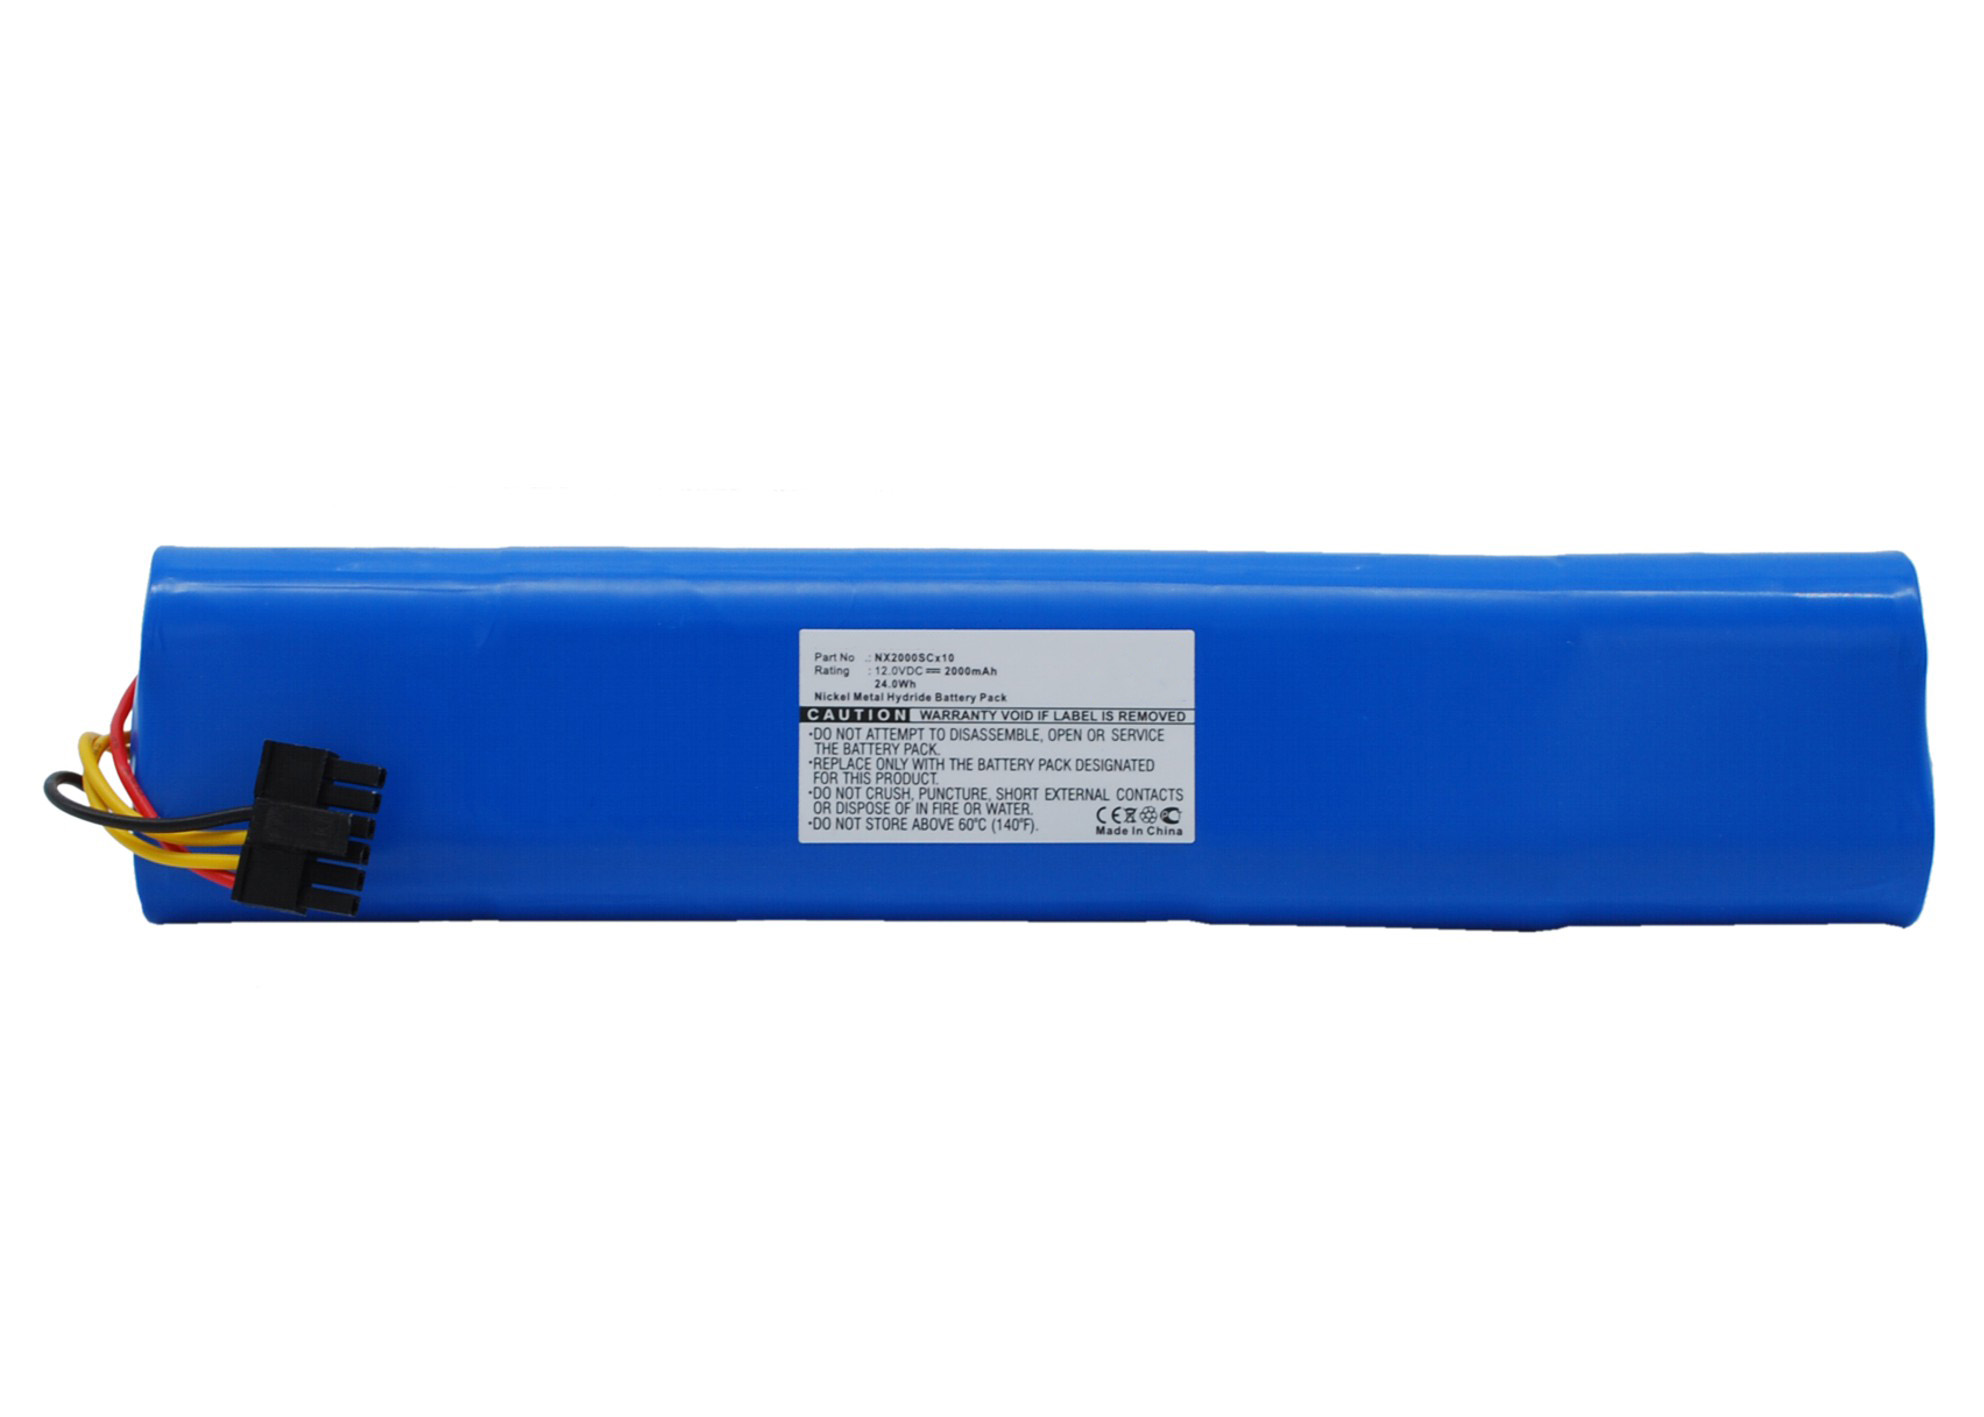 Synergy Digital Vacuum Cleaner Battery, Compatible with Neato 945-0123 Vacuum Cleaner Battery (Ni-MH, 12V, 2000mAh)